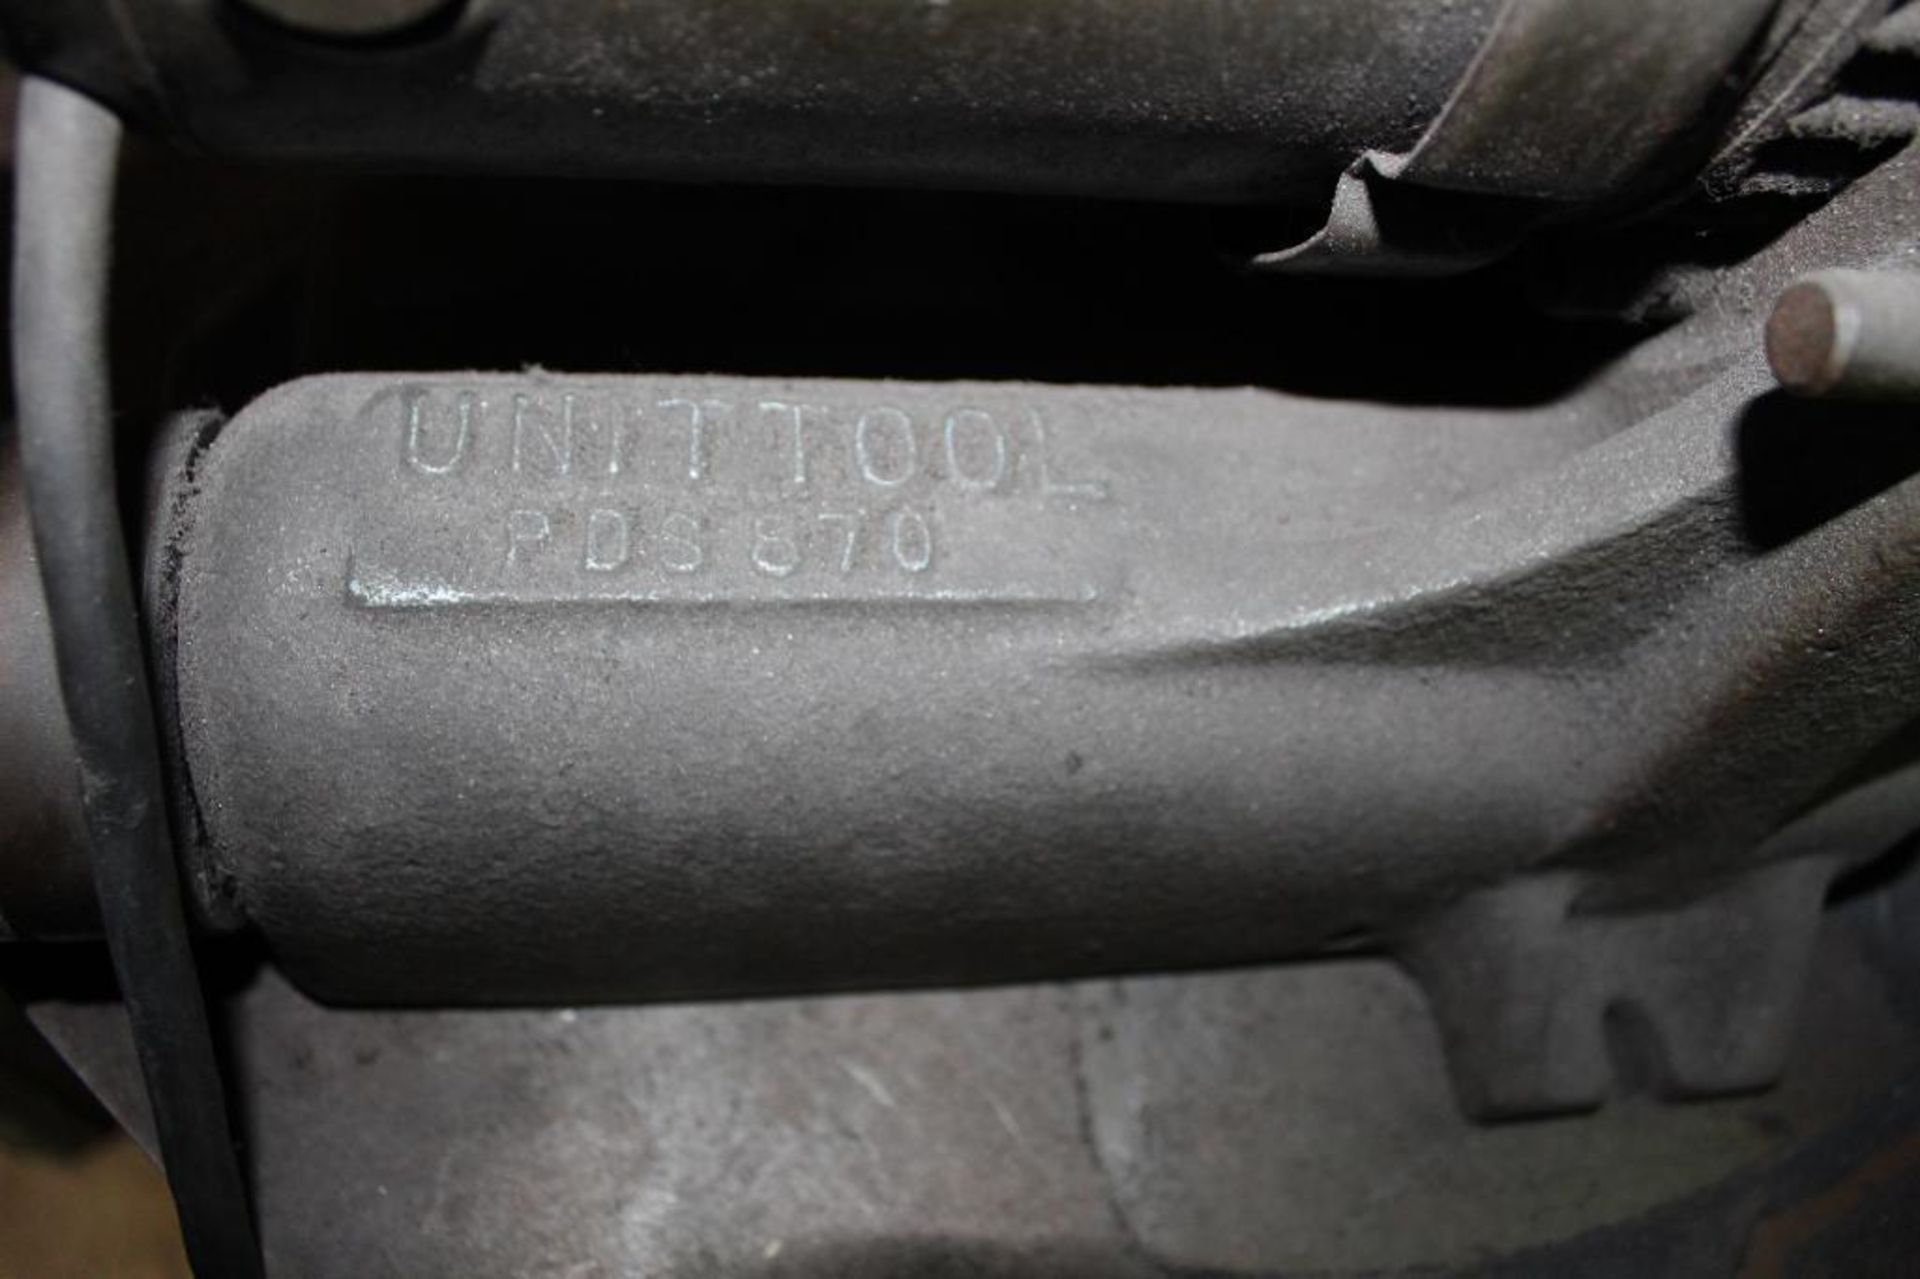 UnitTool PDS 870 Bench Grinder - Image 4 of 6